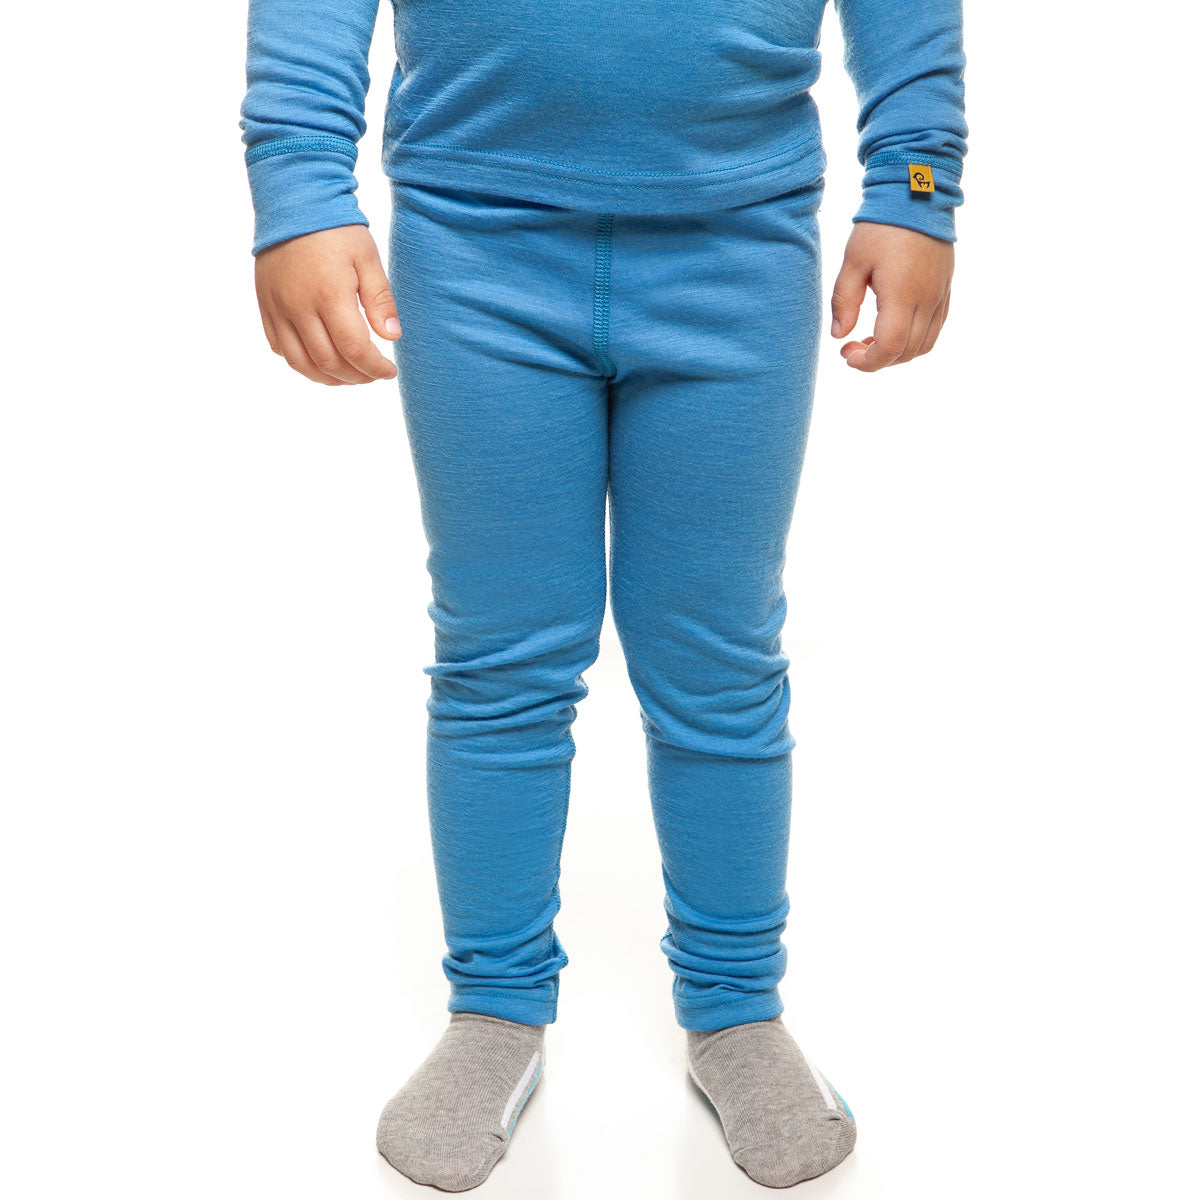 MENIQUE 100% Merino Wool Kids Pants Light Blue